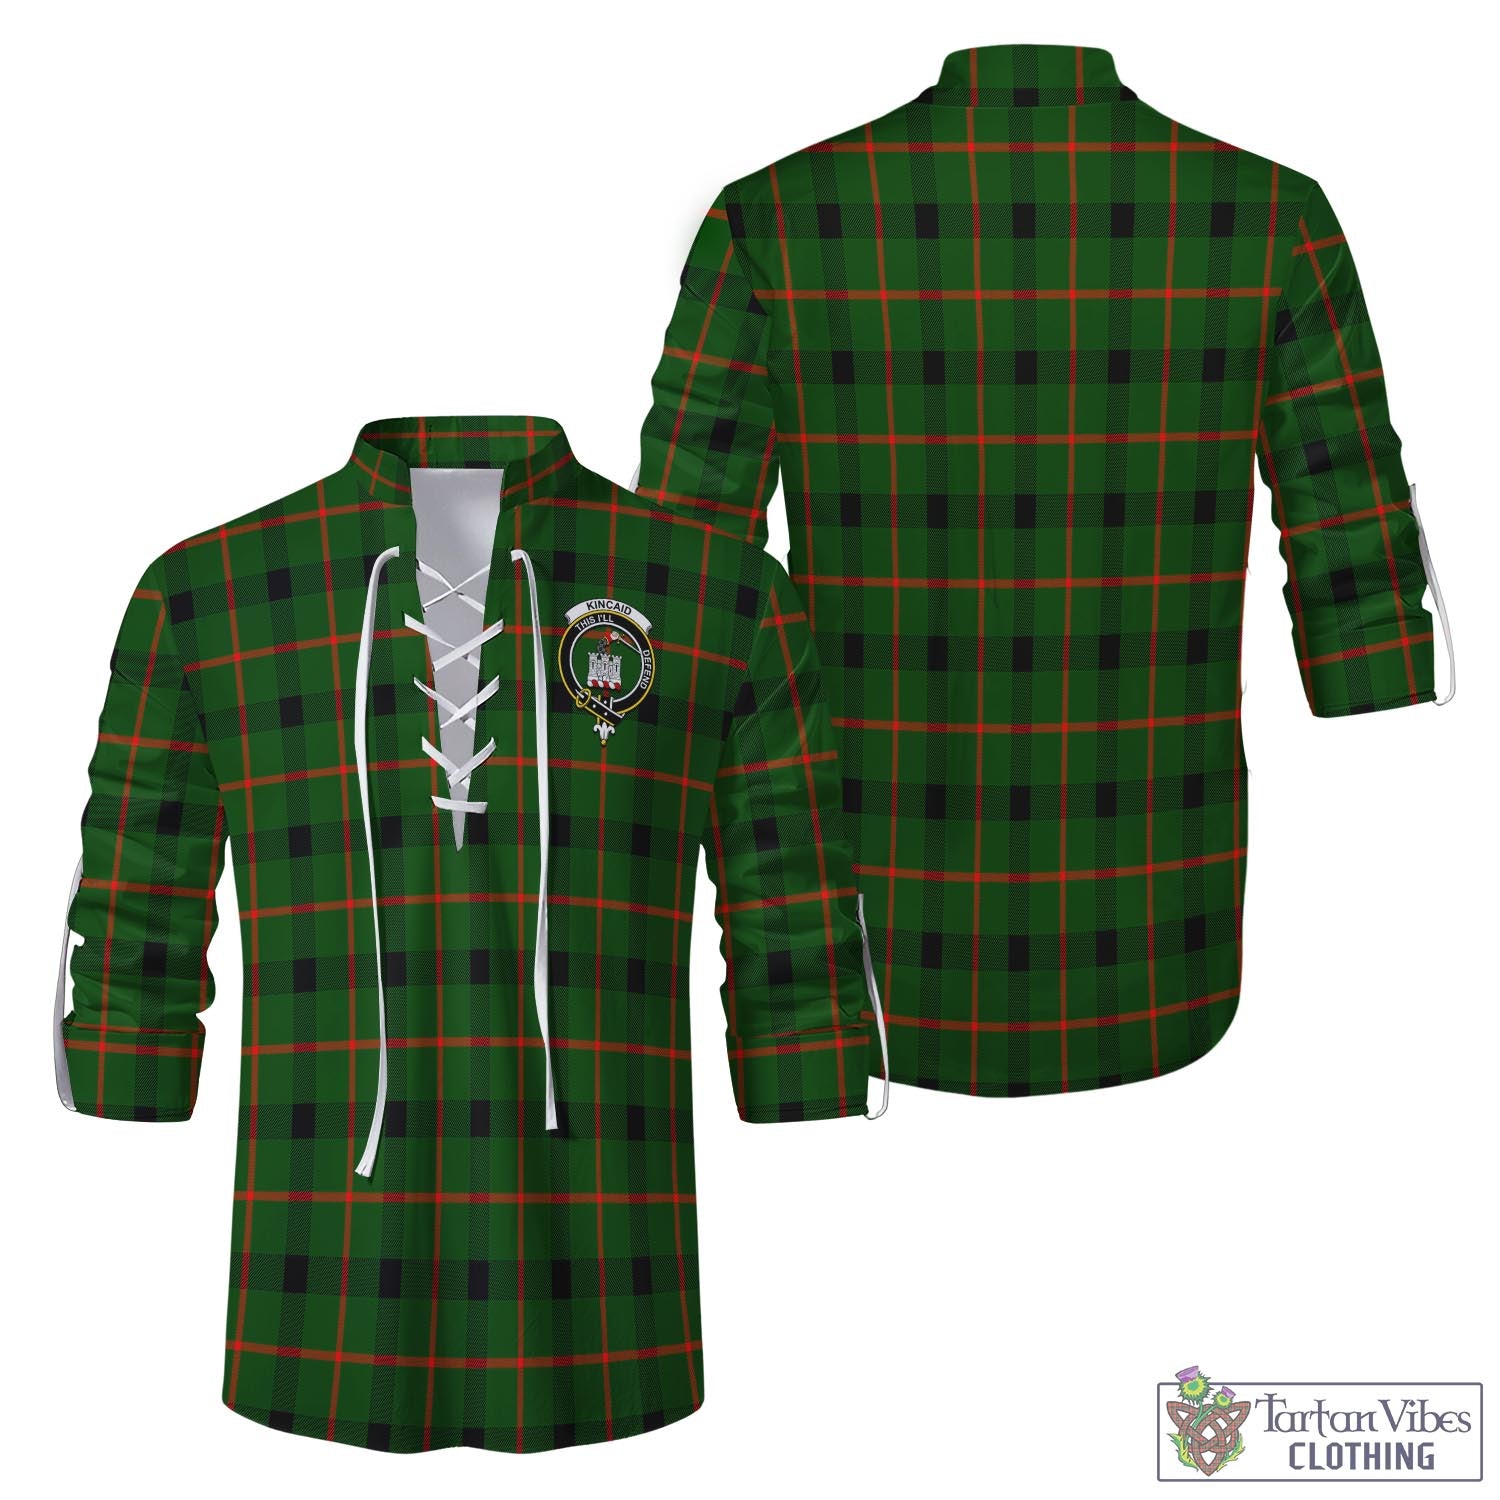 Tartan Vibes Clothing Kincaid Modern Tartan Men's Scottish Traditional Jacobite Ghillie Kilt Shirt with Family Crest